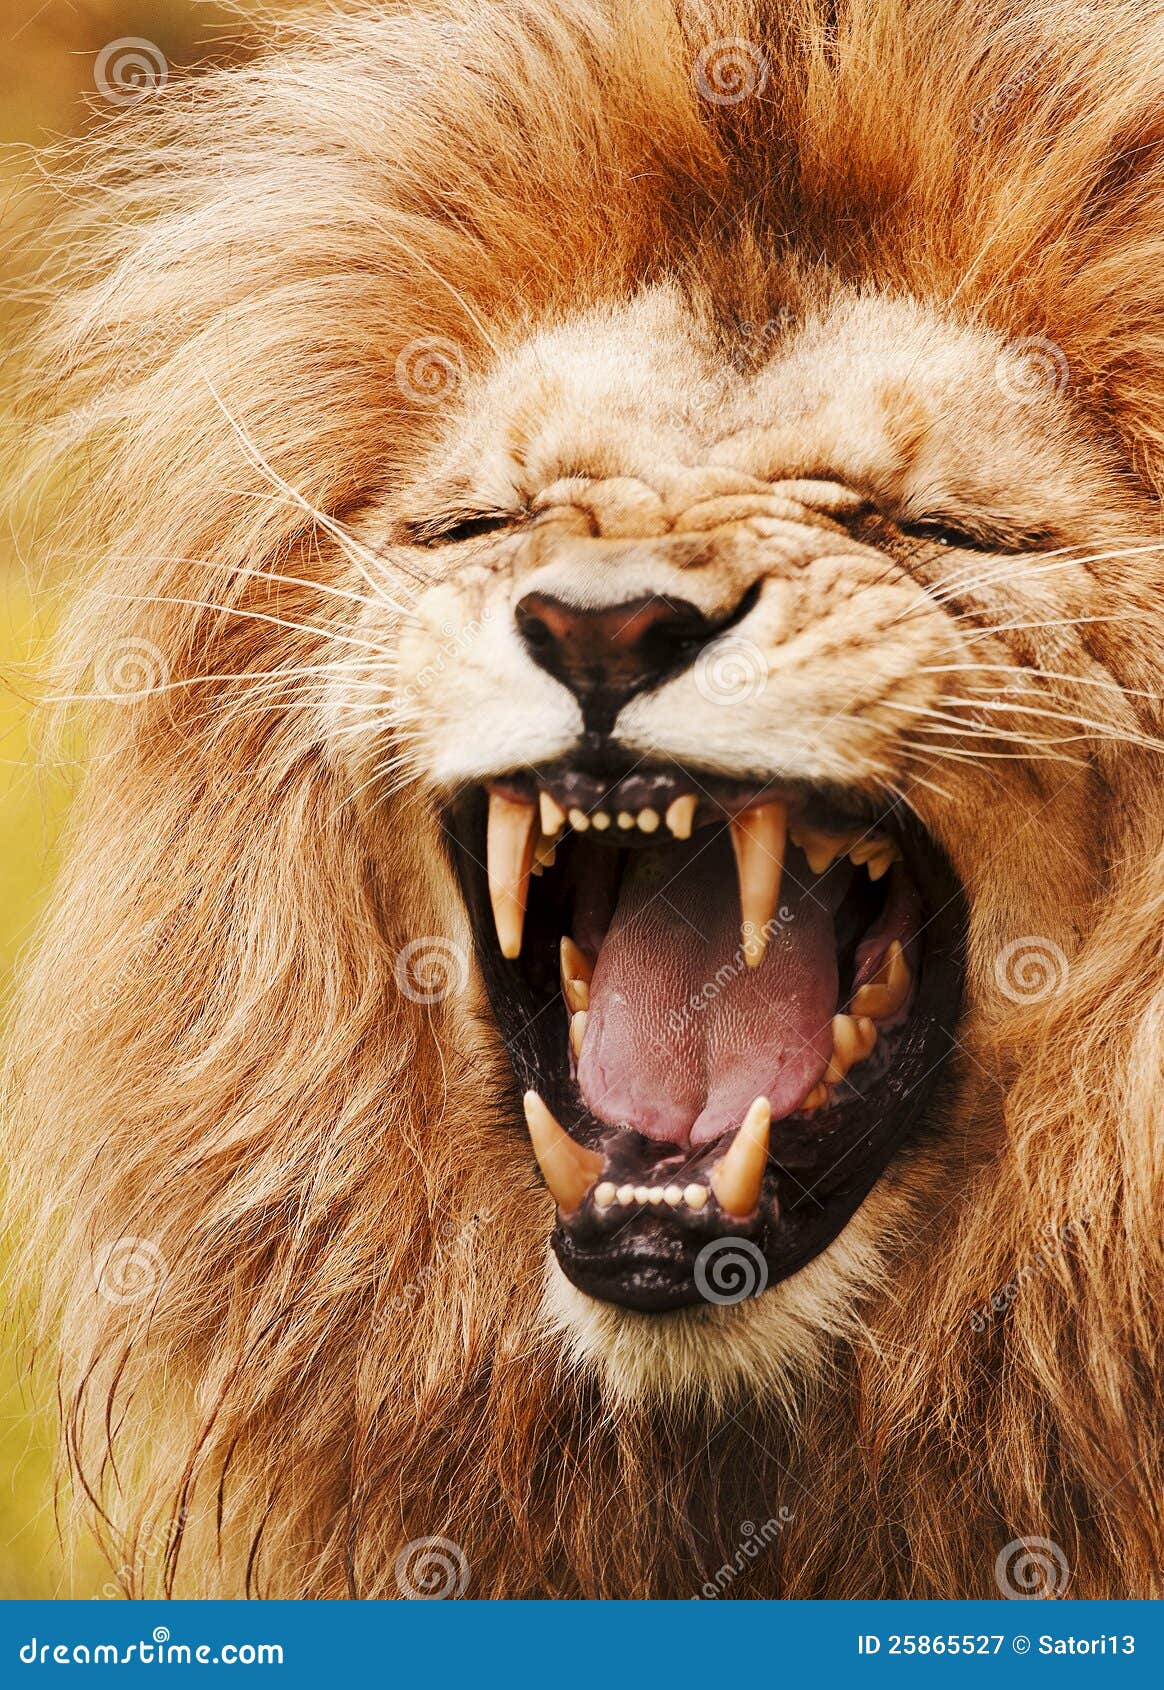 Roaring lion stock image. Image of face, dangerous, animal - 25865527